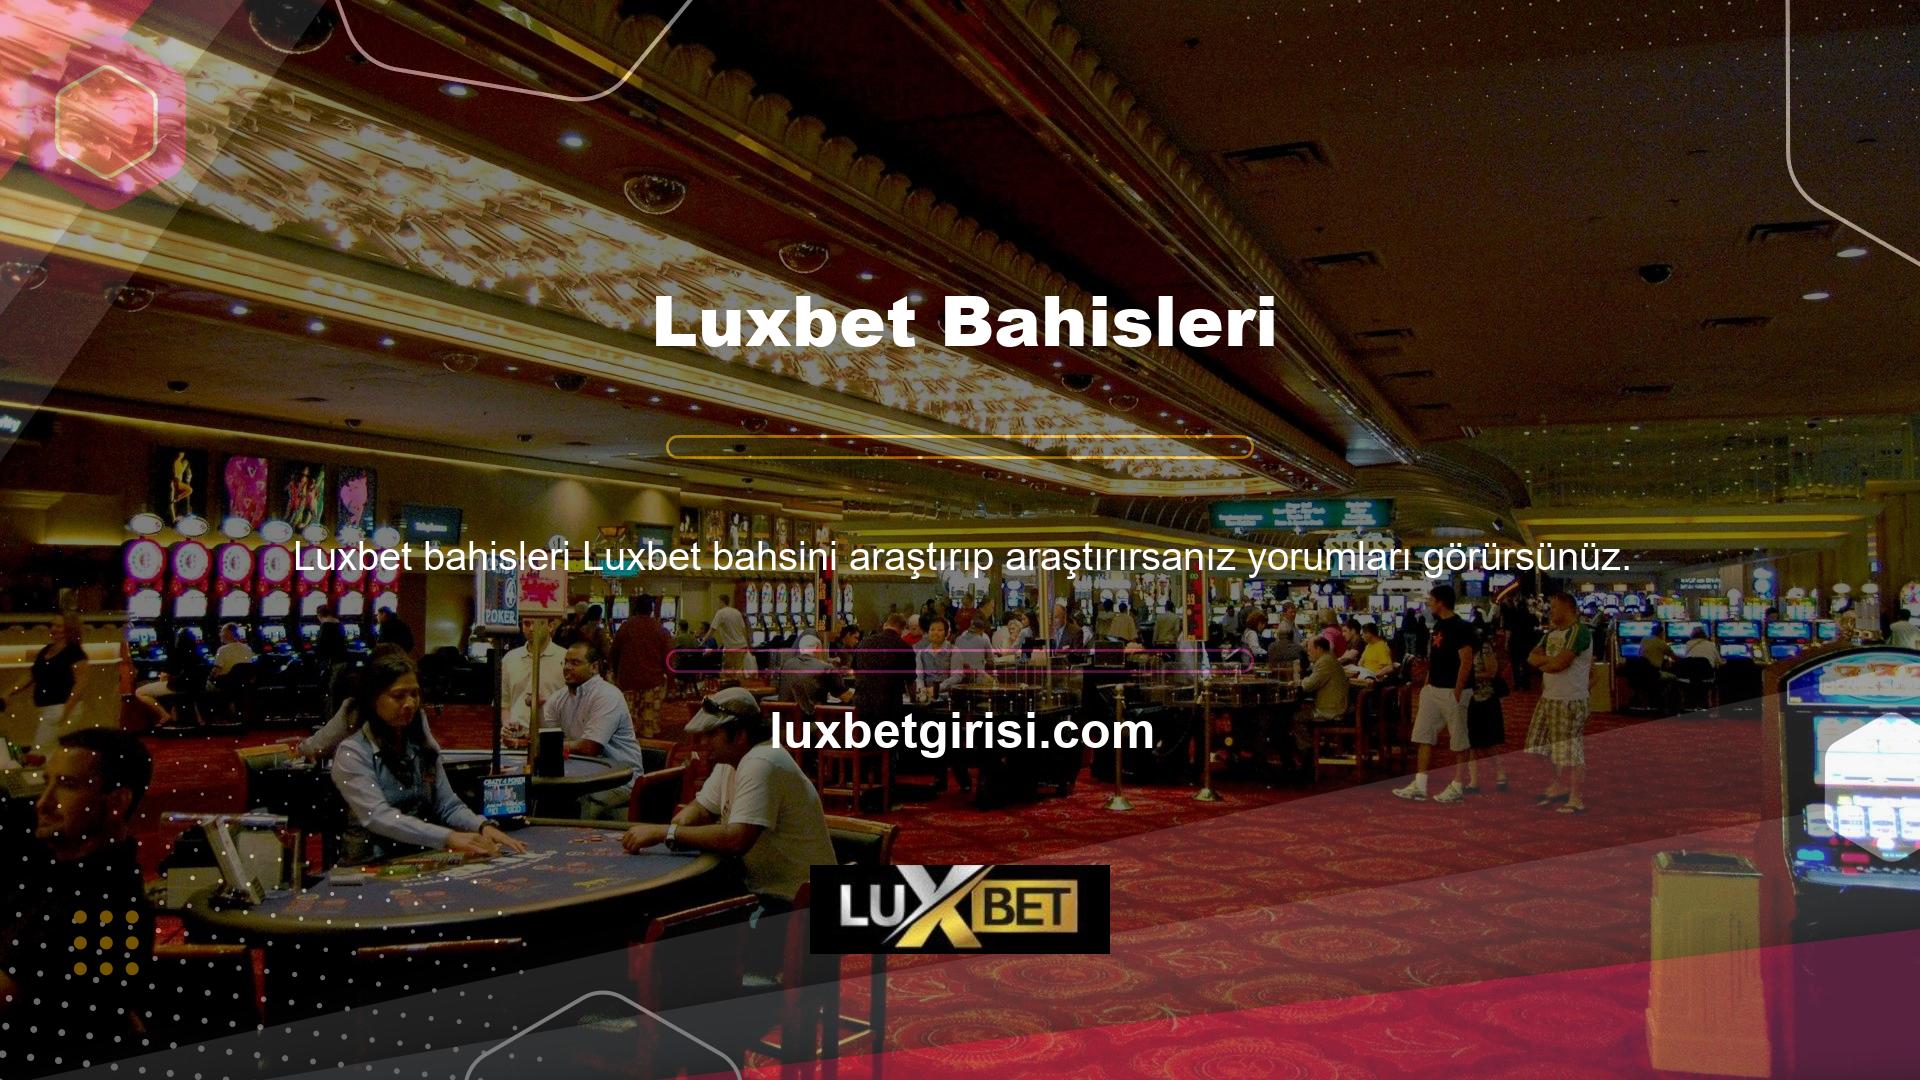 Luxbet Bahisleri